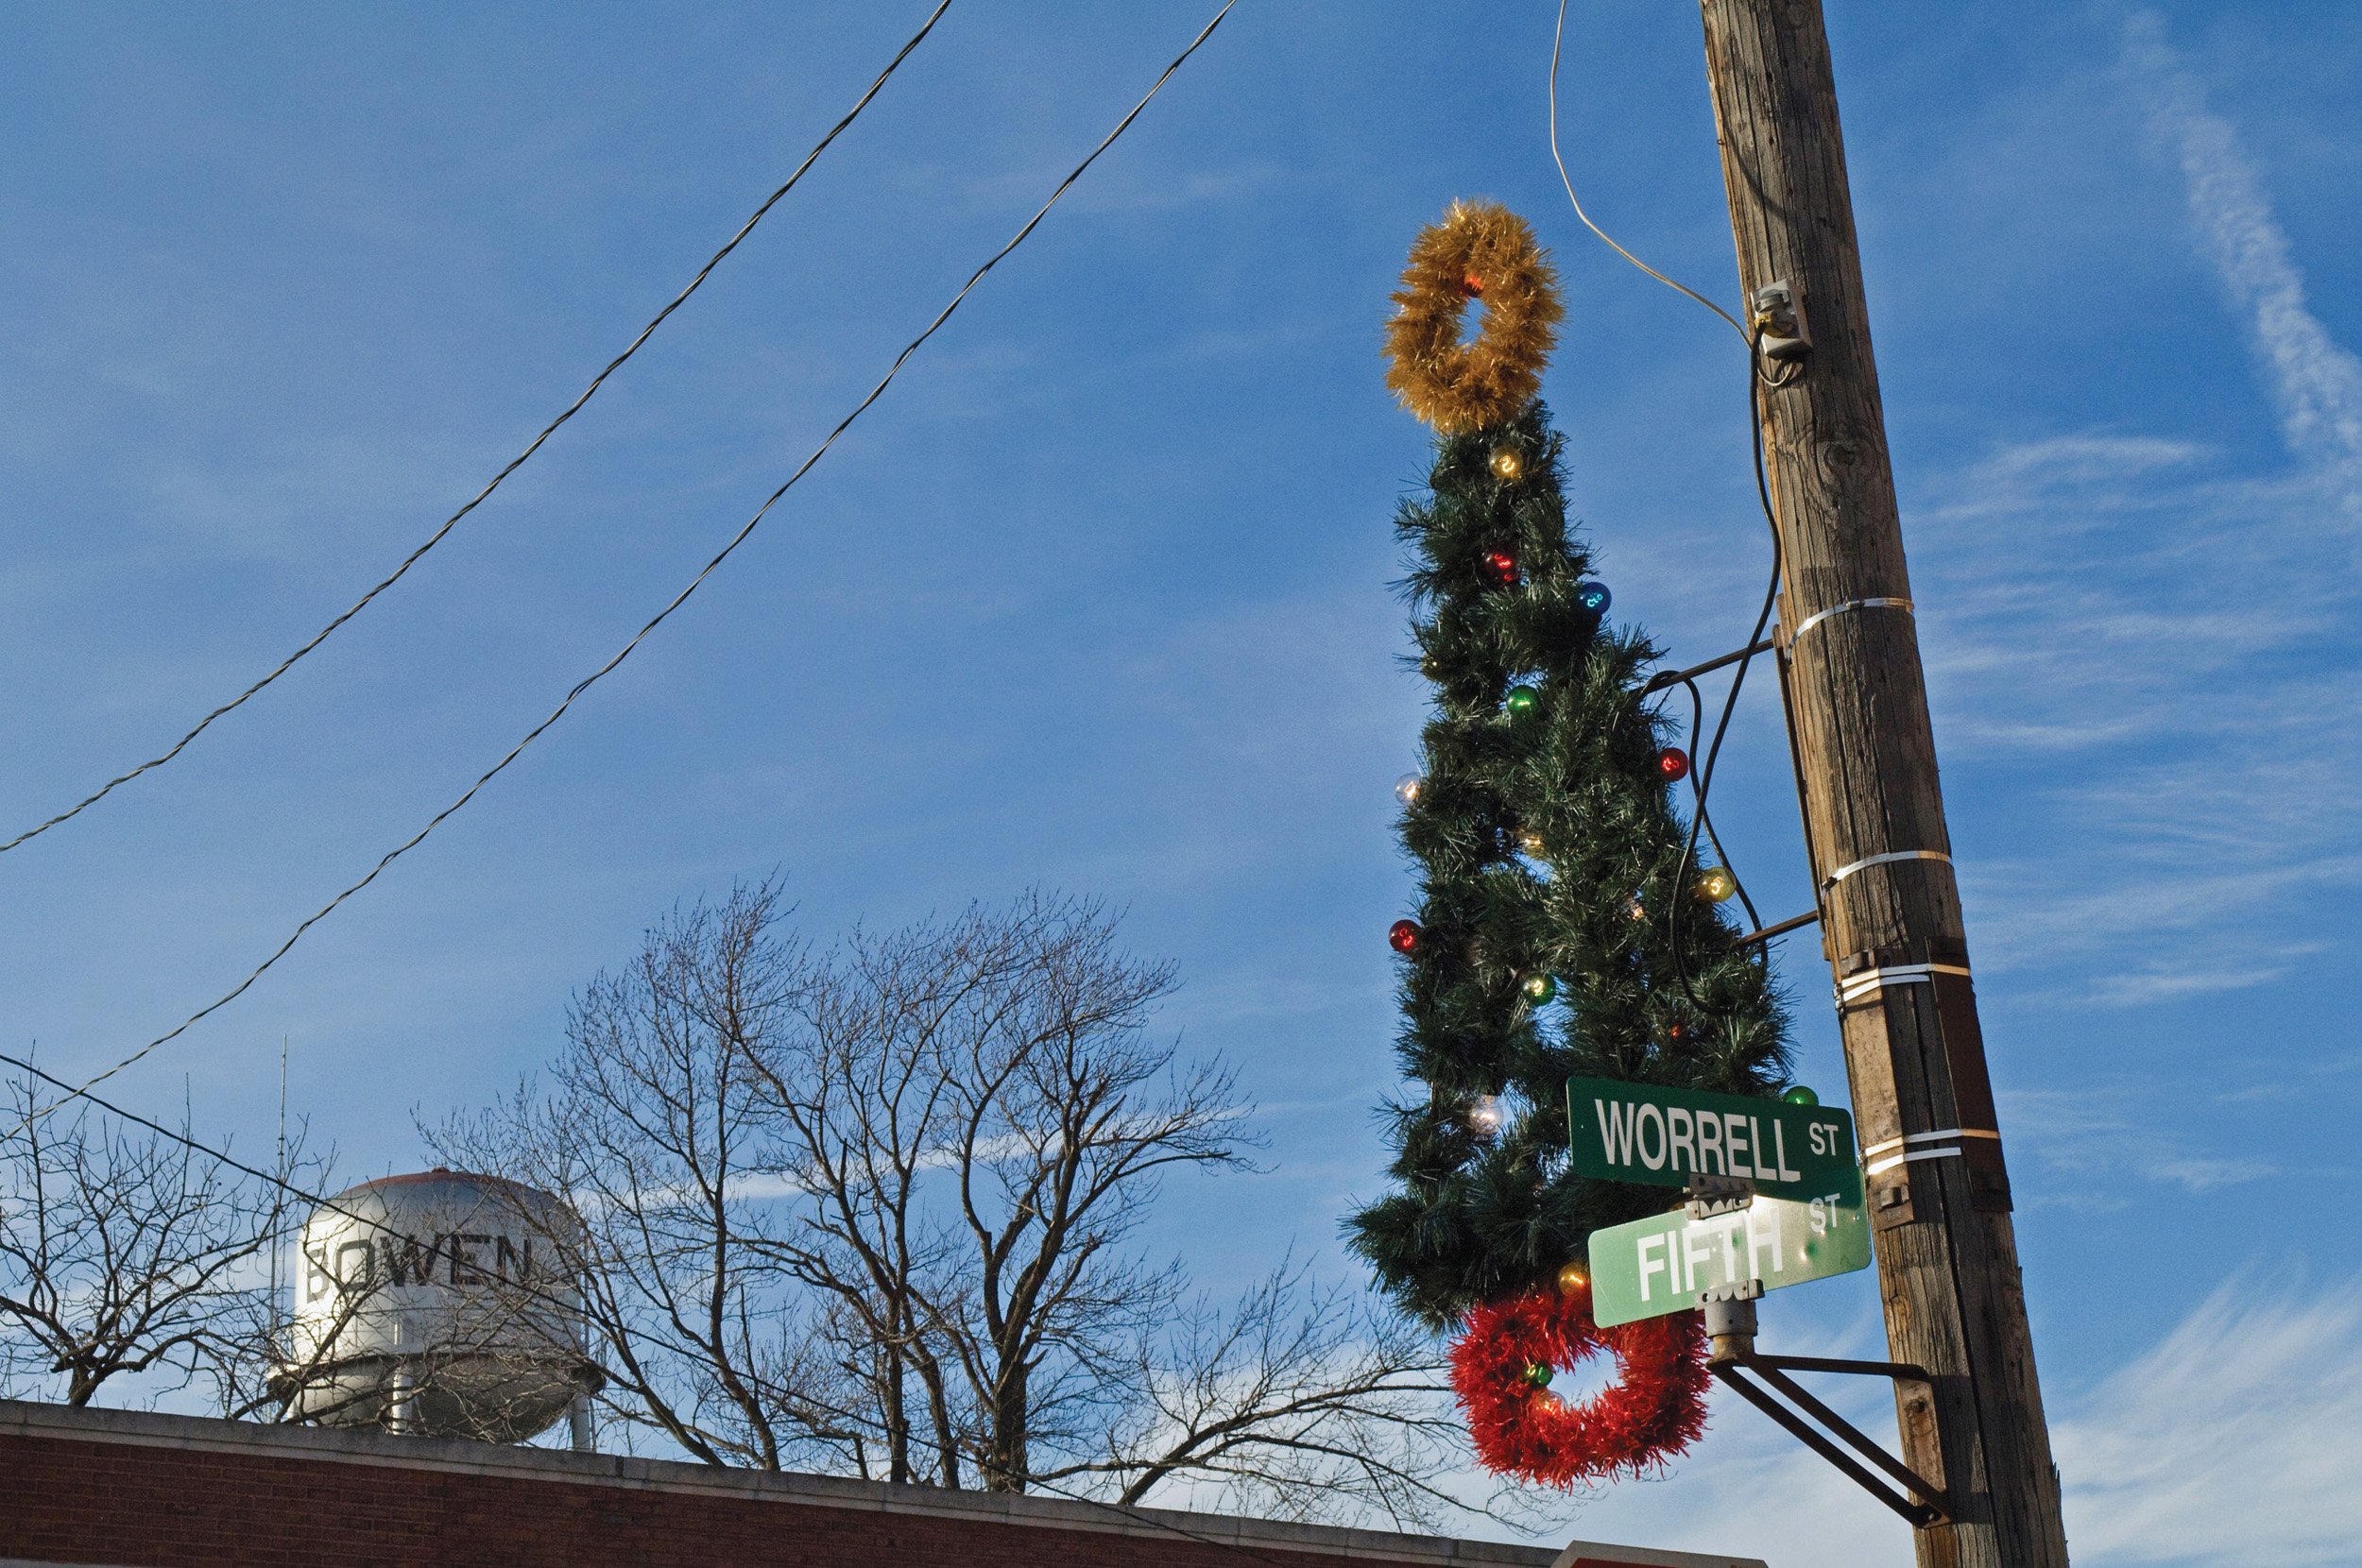  Christmas decorations in Bowen, IL. Dec. 2010 